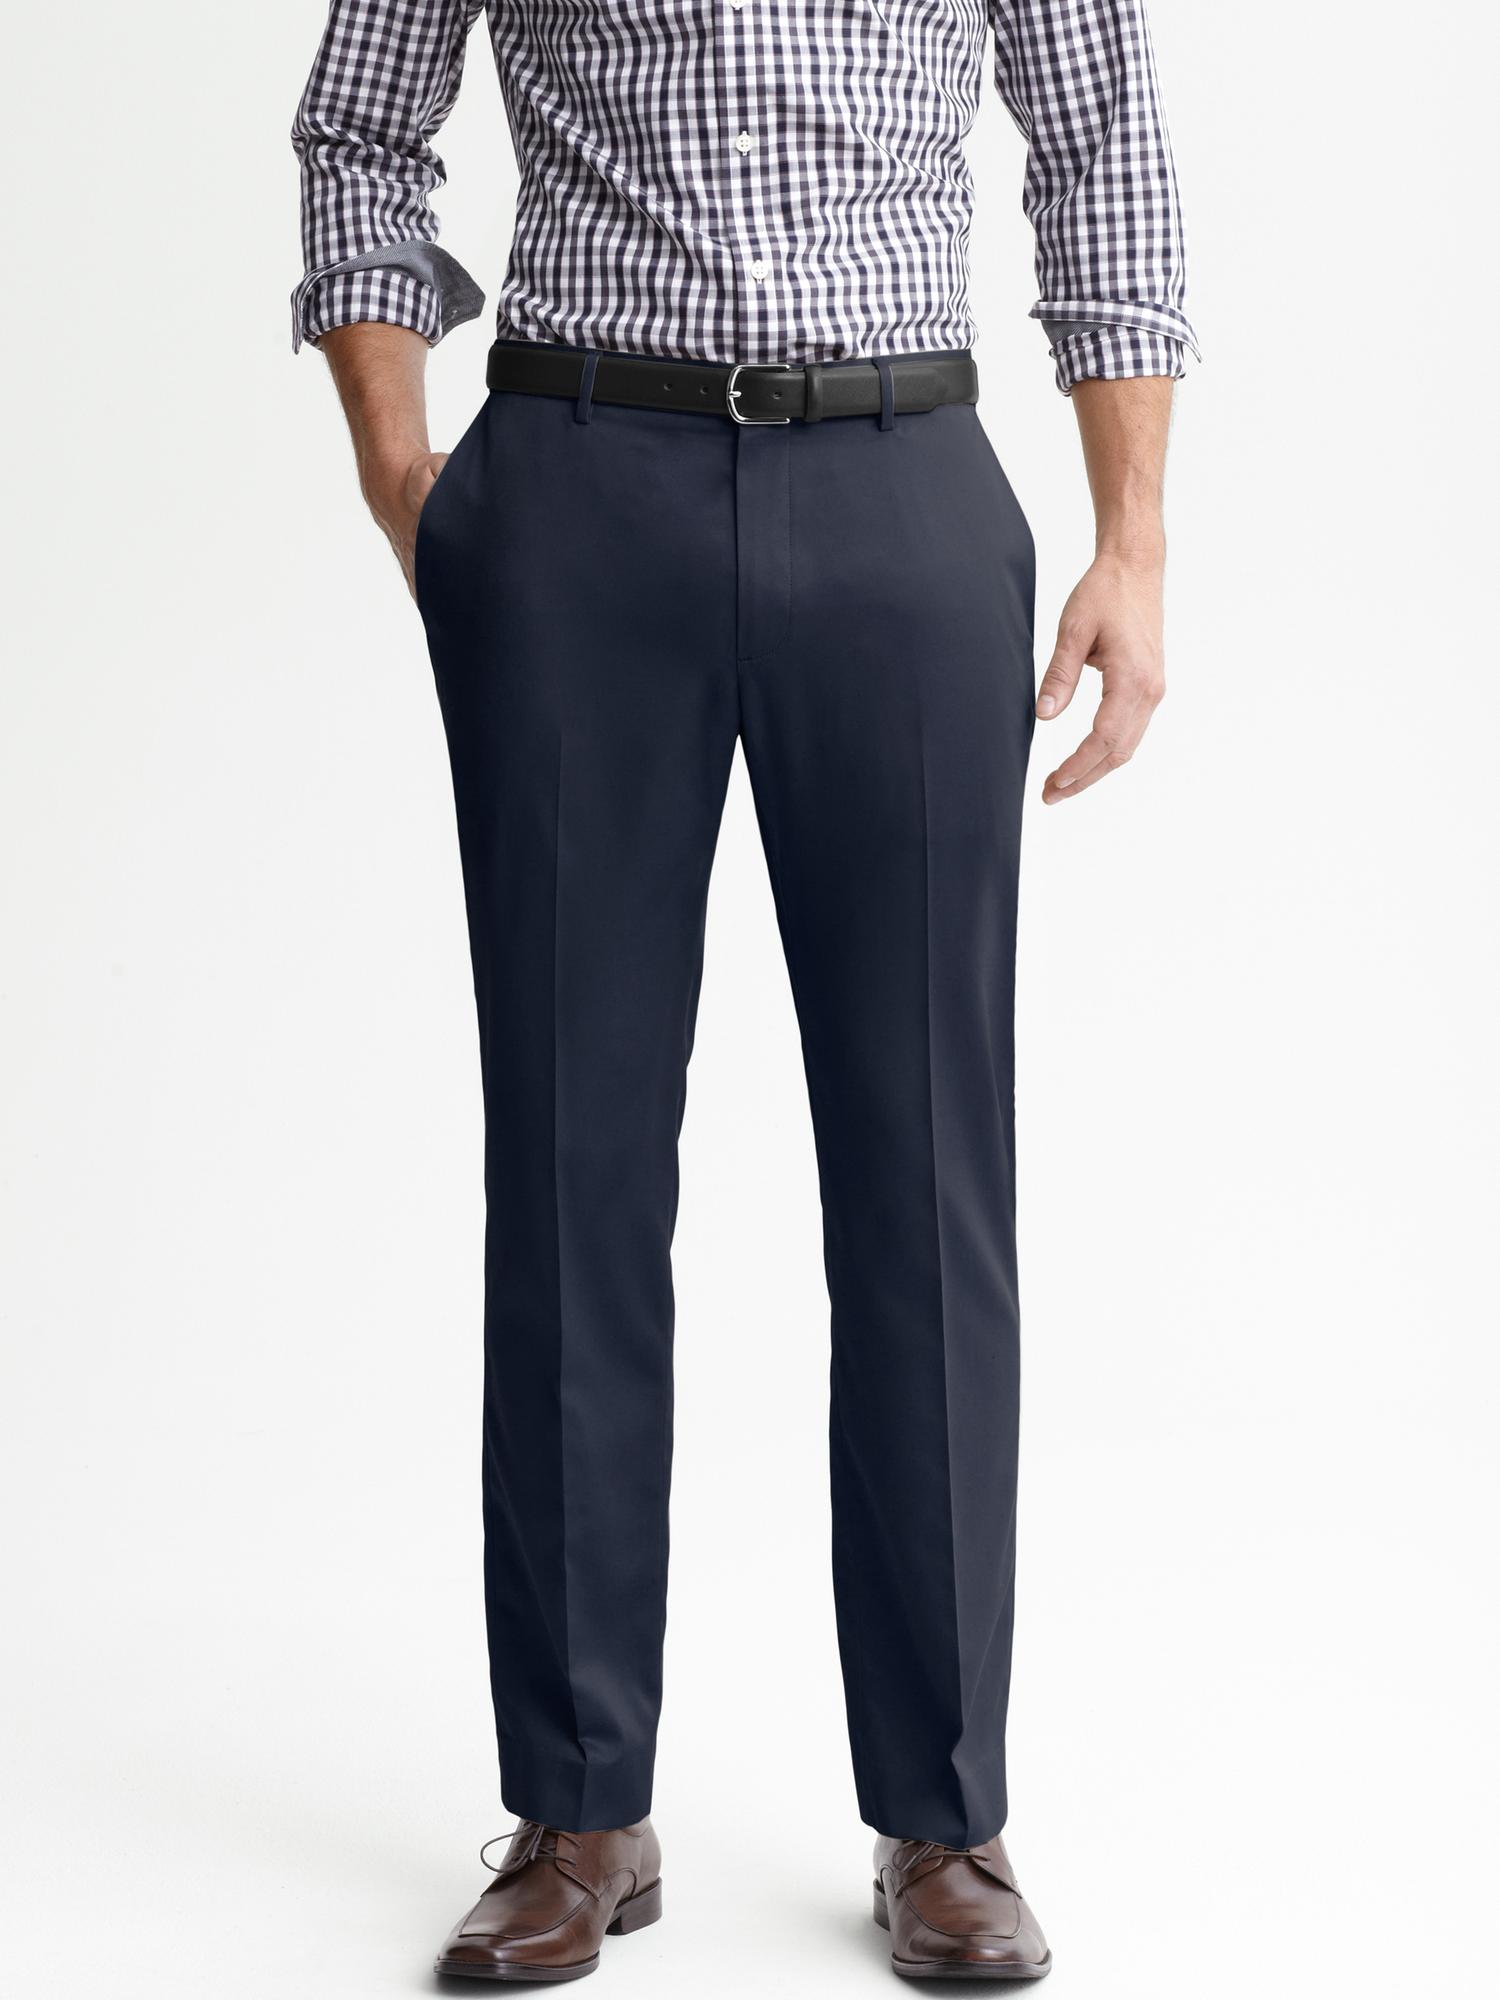 Tailored Slim Non-Iron Cotton Pant